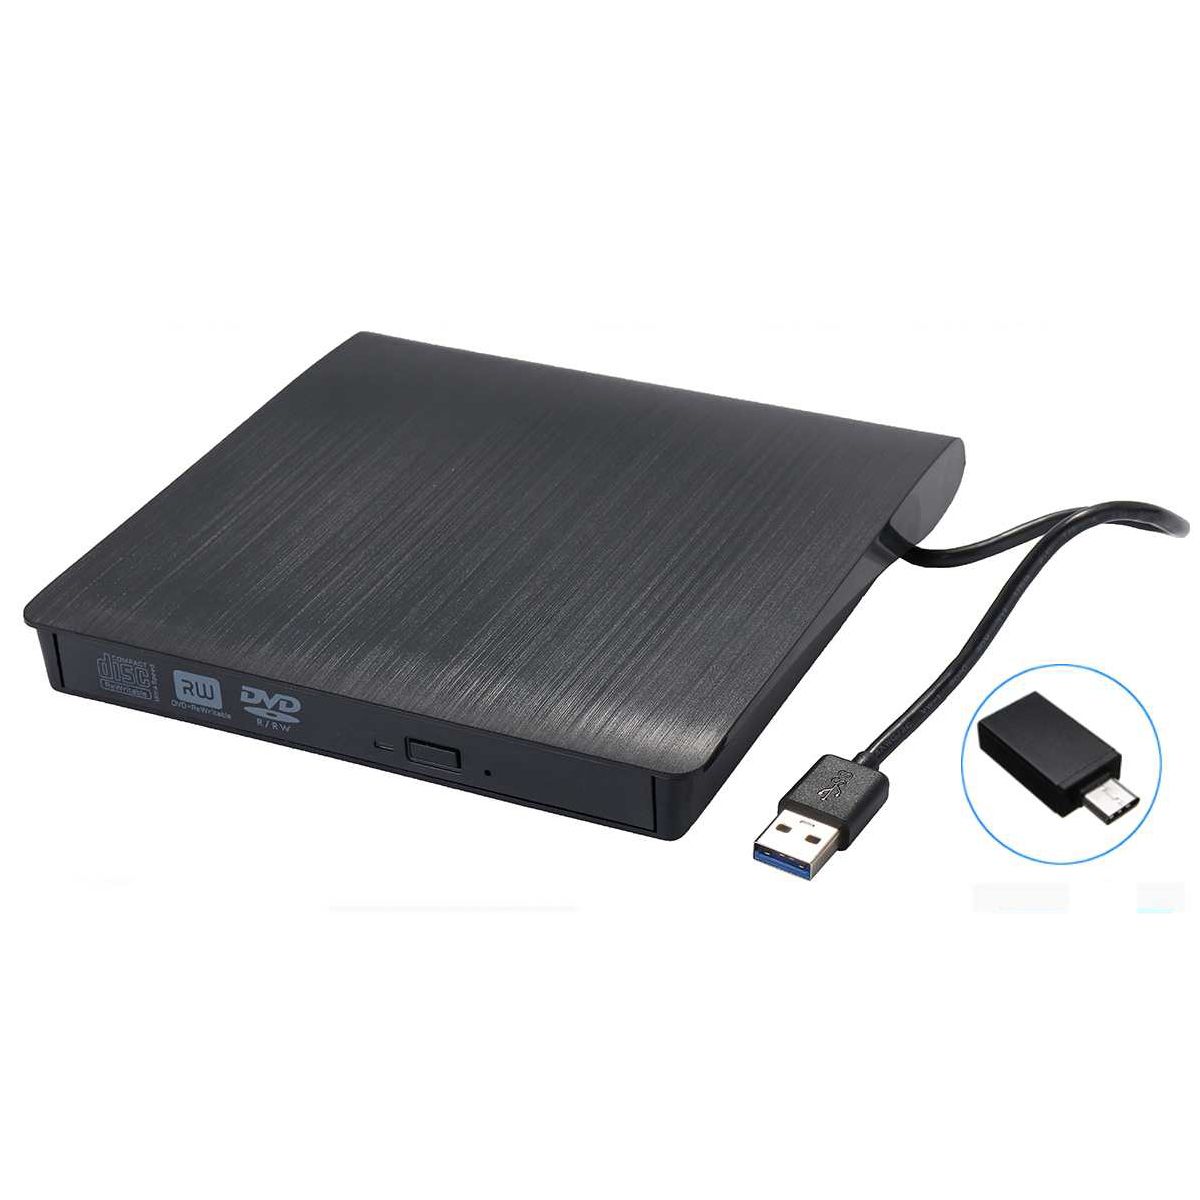 Slim-External-DVD-RW-CD-Writer-Drive-USB-30Type-C-Burner-Reader-Player-Optical-Drives-For-Macs-Lapto-1711271